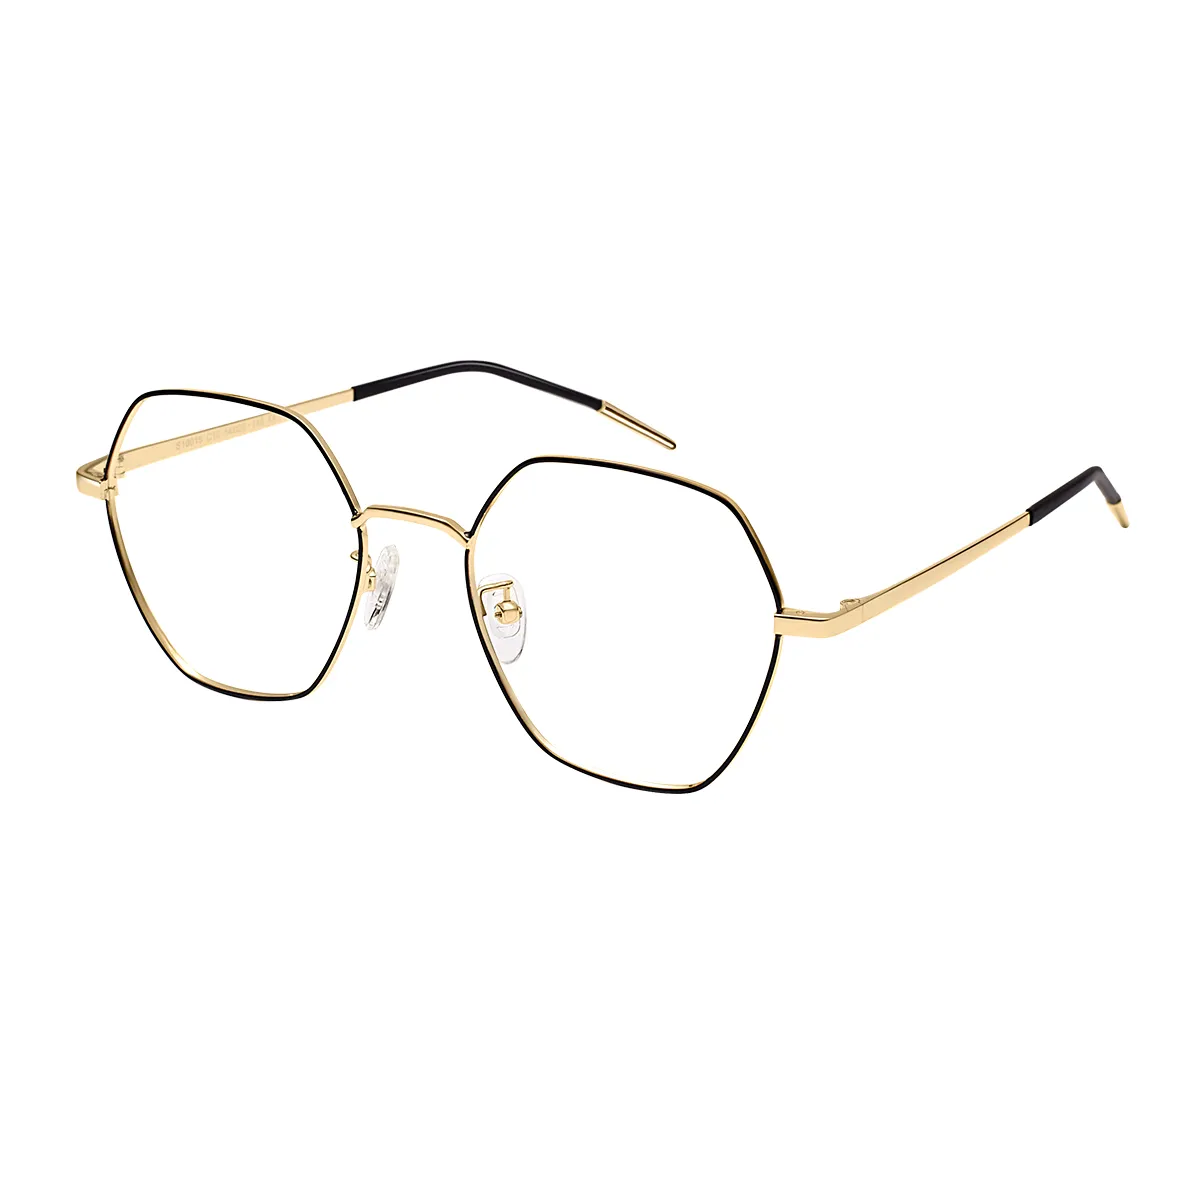 Bartley - Geometric Gold black Glasses for Women